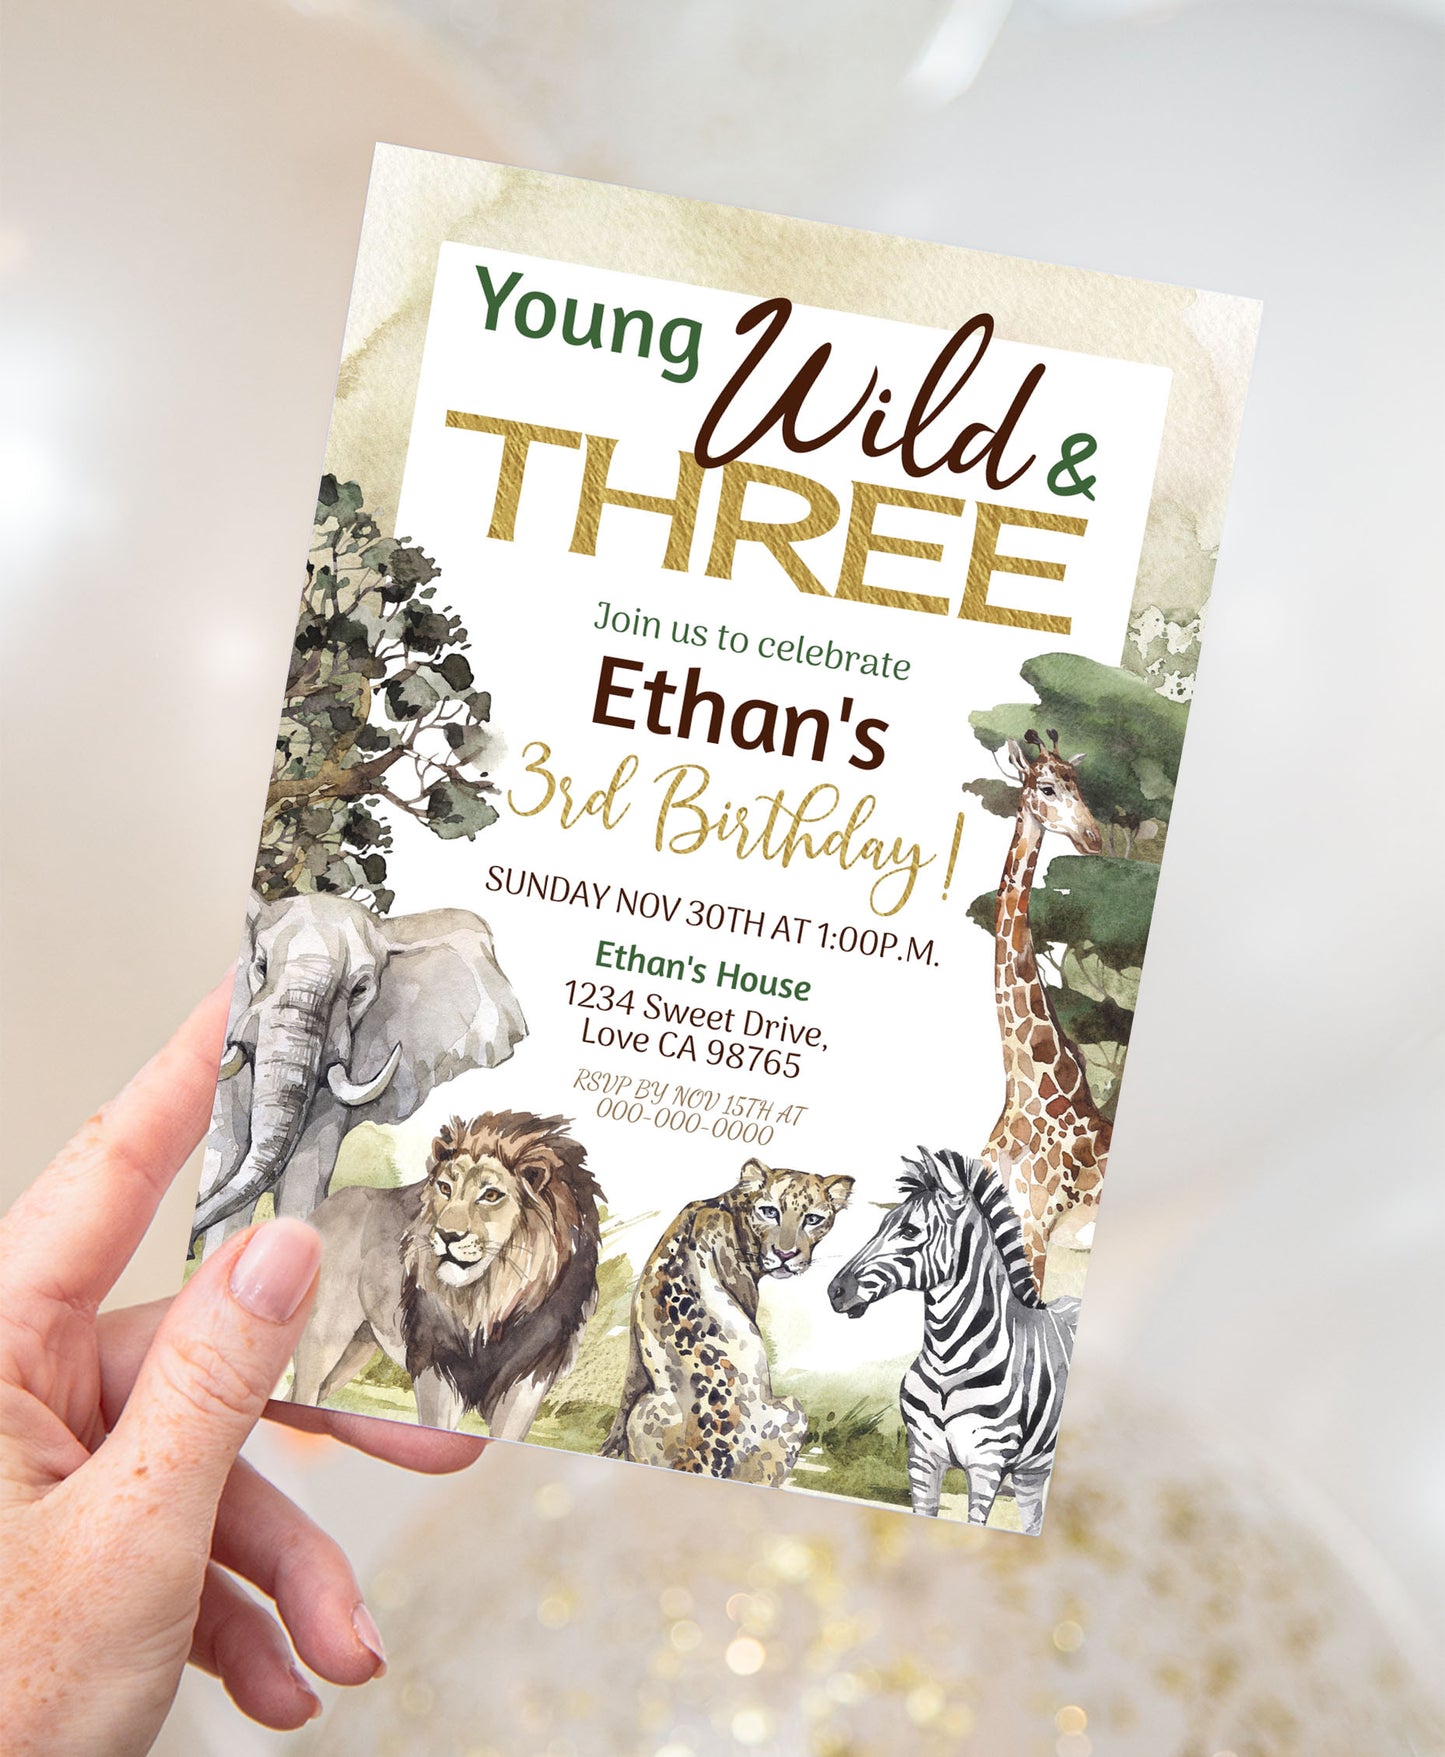 Young wild and three Birthday Invitation | Safari 3rd birthday Party Invite - 35I